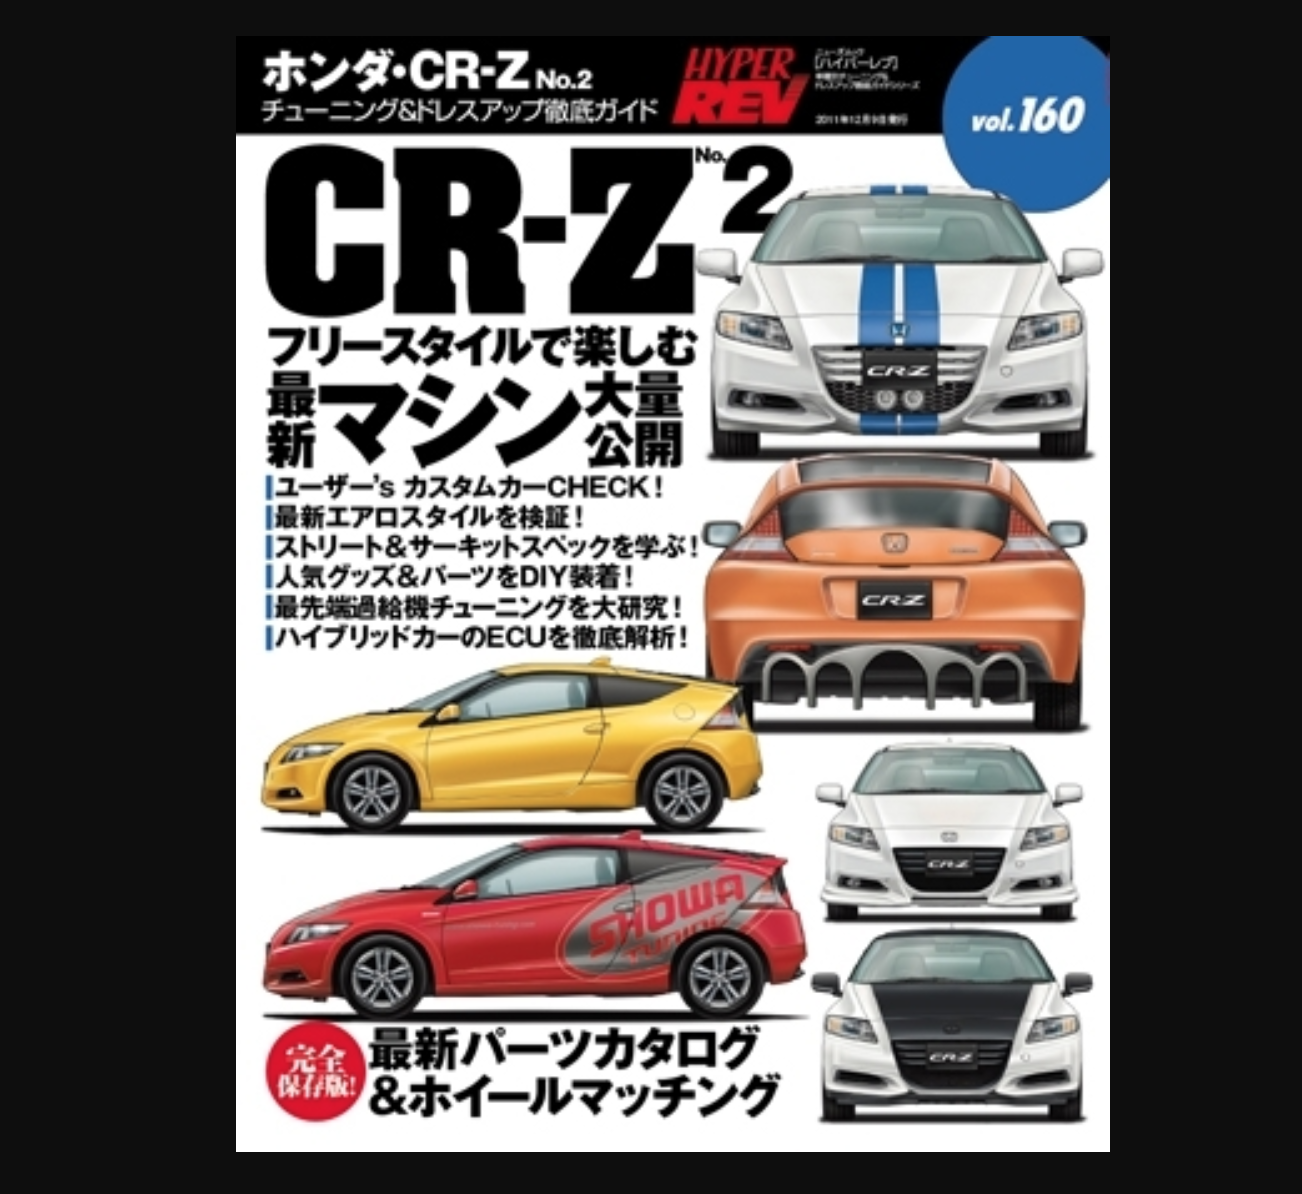 Hyper REV - Honda CR-Z No.2 Vol 160 - Nengun Performance